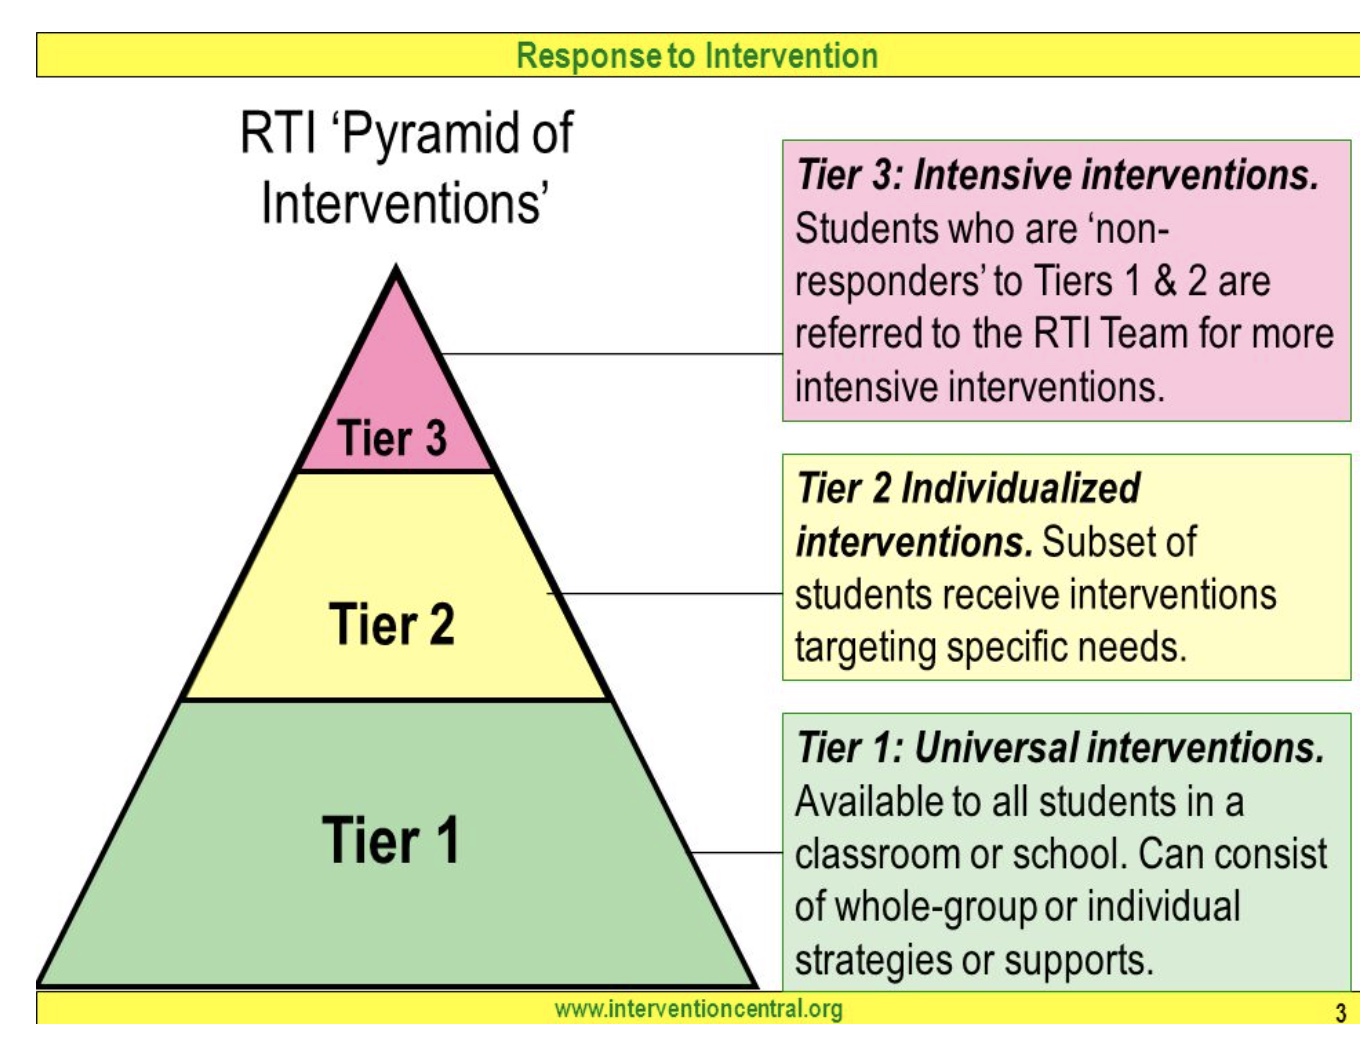 RTI pyramid as described in text